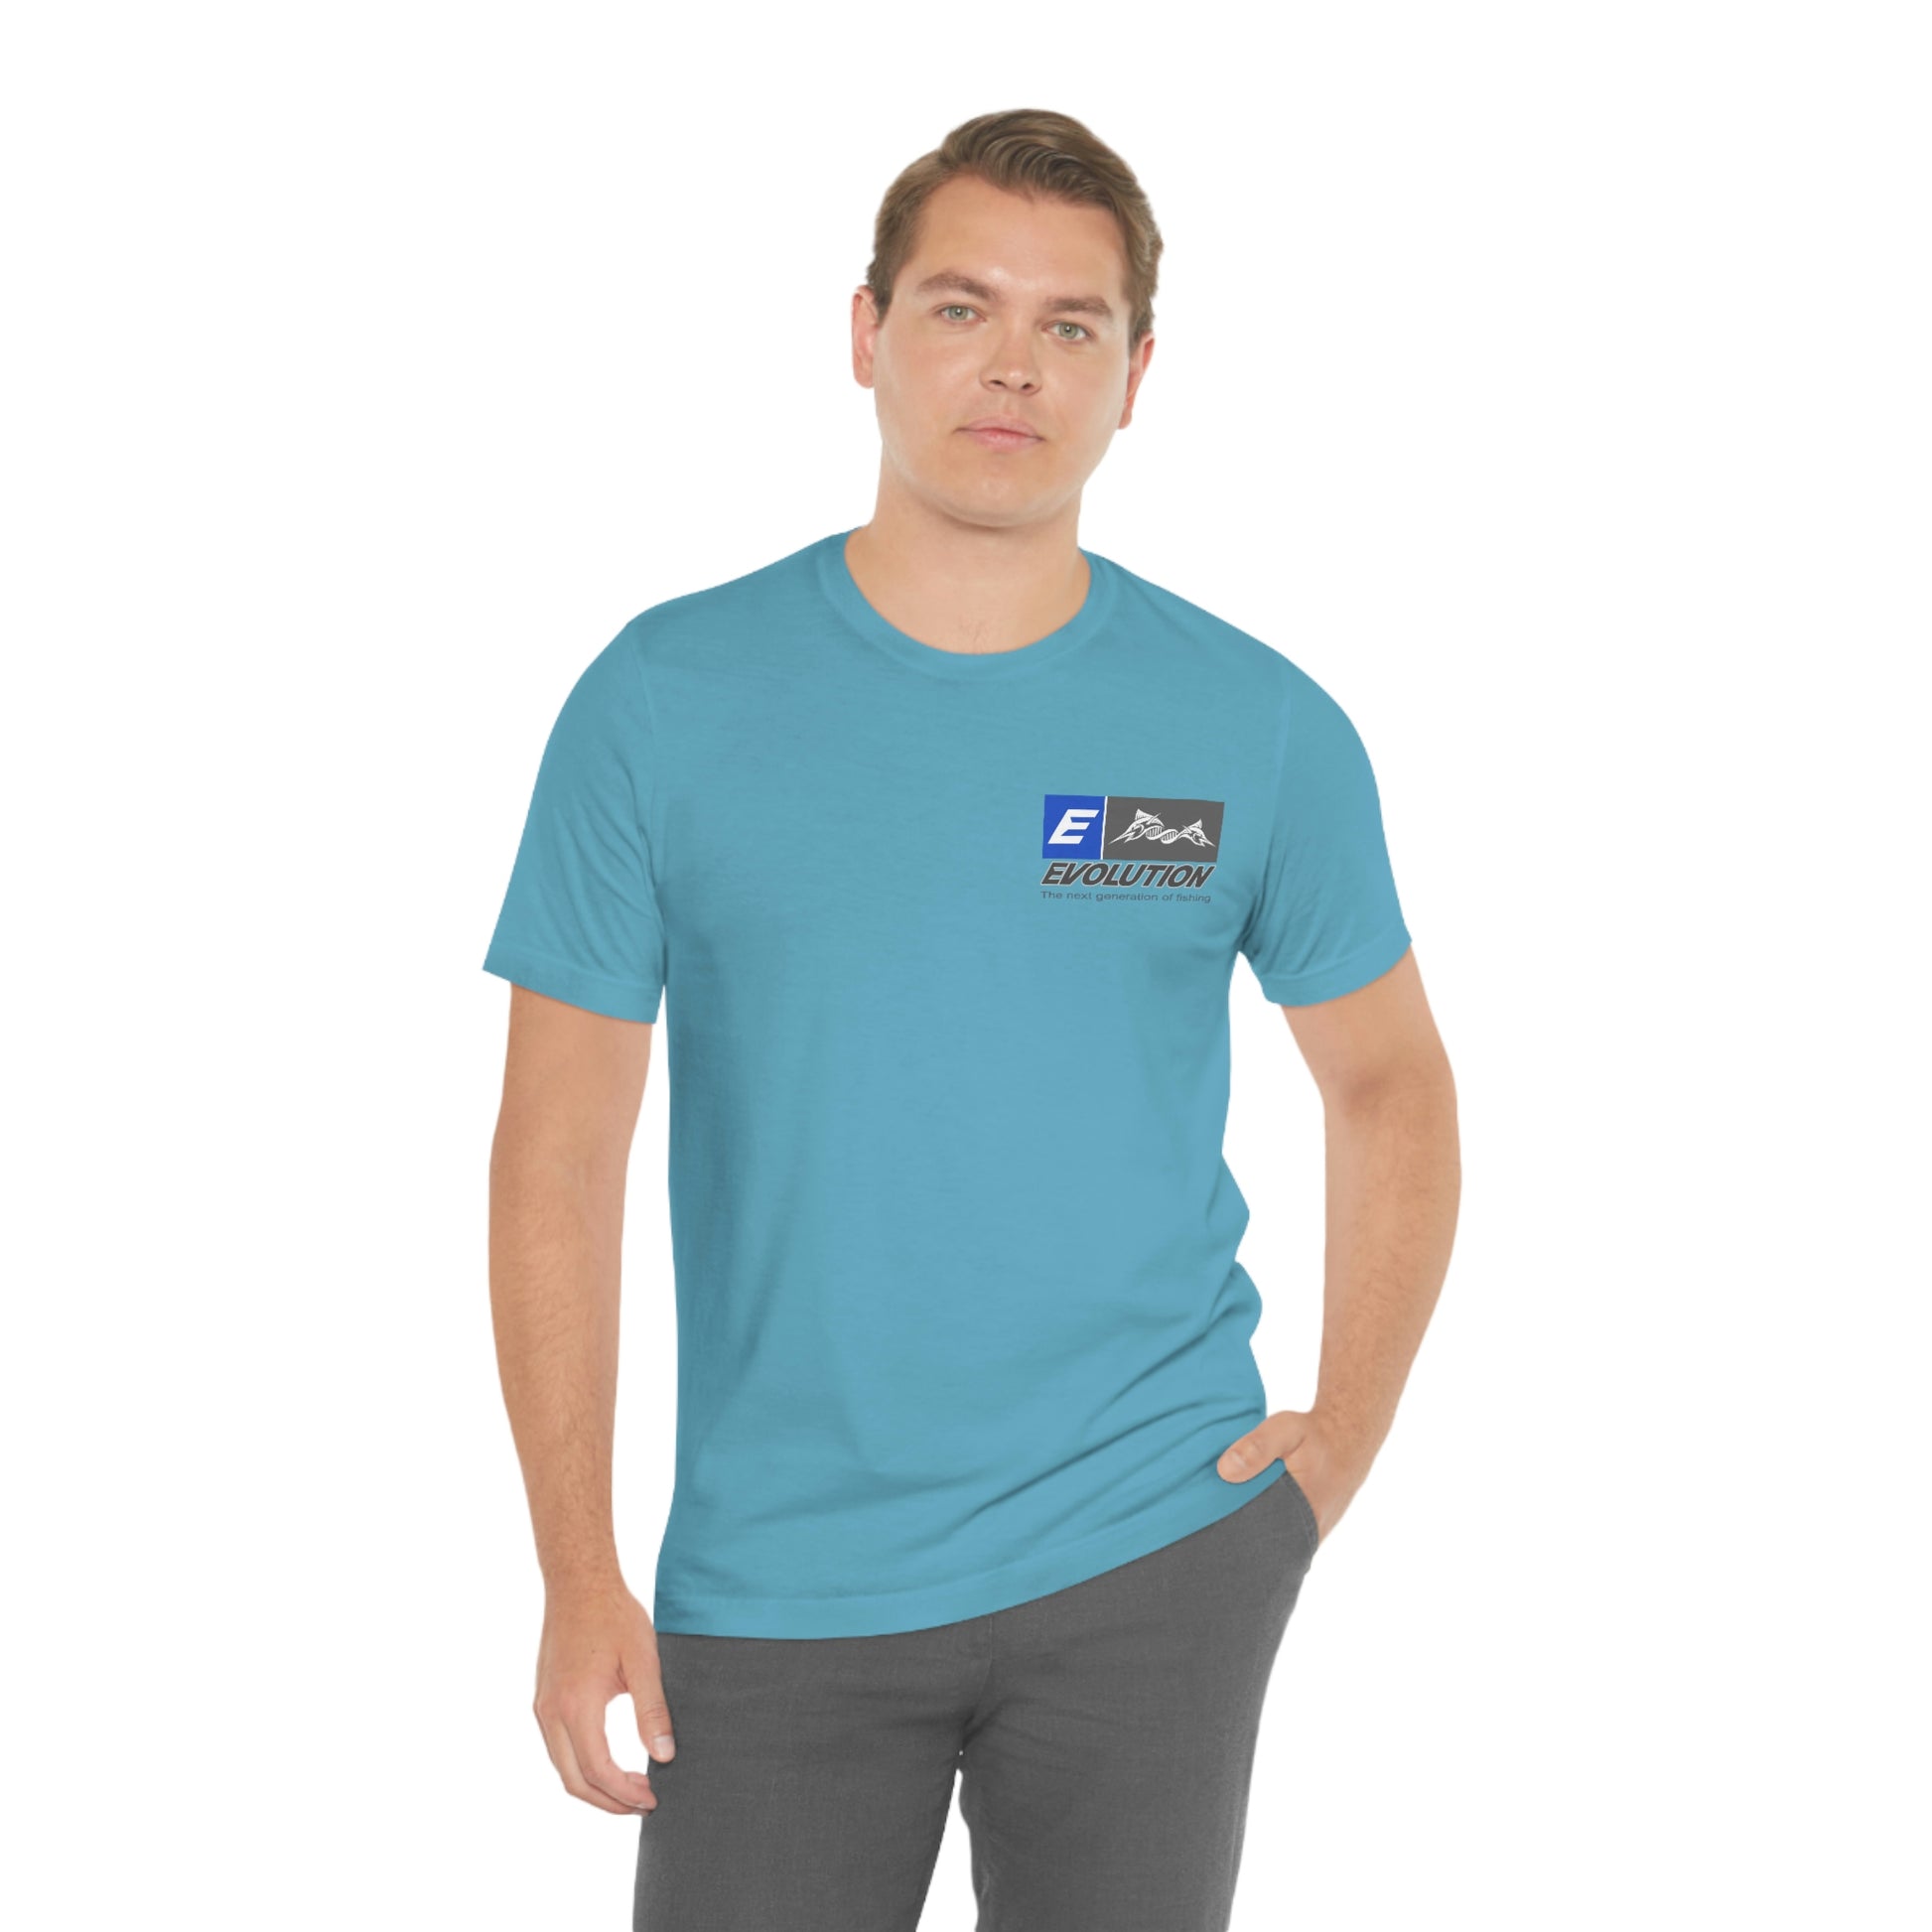 Marlin Graphic Shirt - Evolution Lures